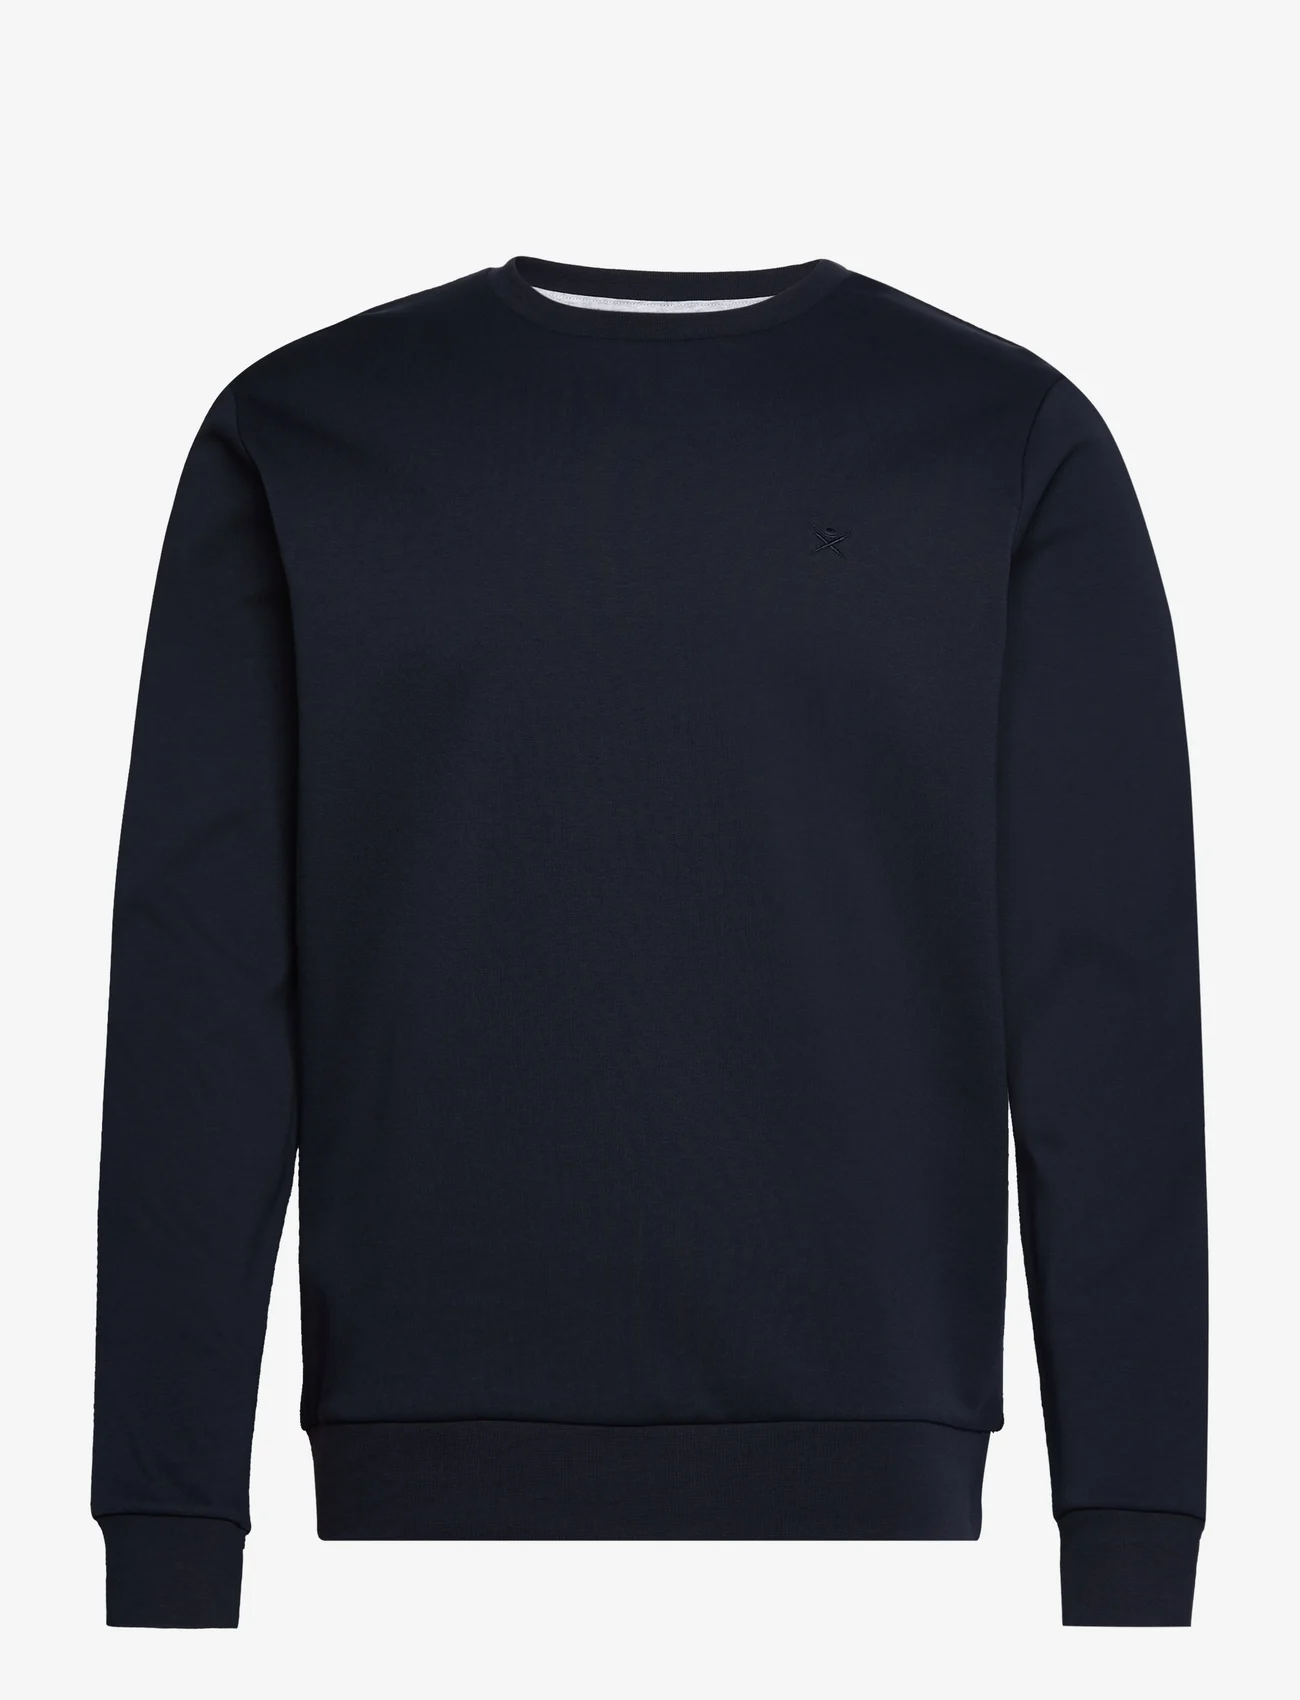 Hackett London - DOUBLE KNIT CREW - sportiska stila džemperi - navy blue - 0